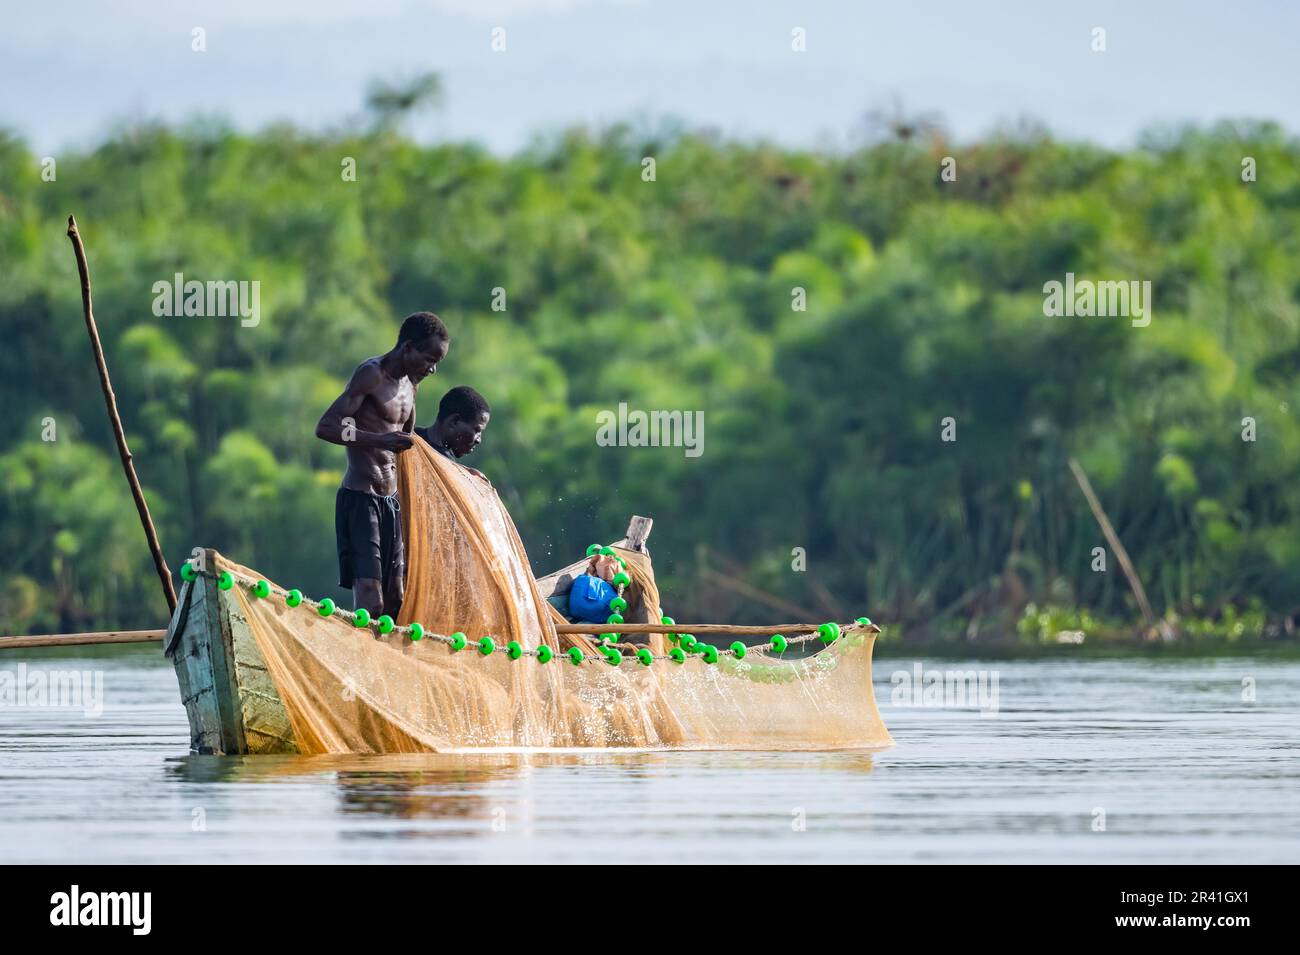 https://c8.alamy.com/comp/2R41GX1/two-local-men-fishing-in-a-small-boat-on-lake-victoria-kisumu-kenya-africa-2R41GX1.jpg